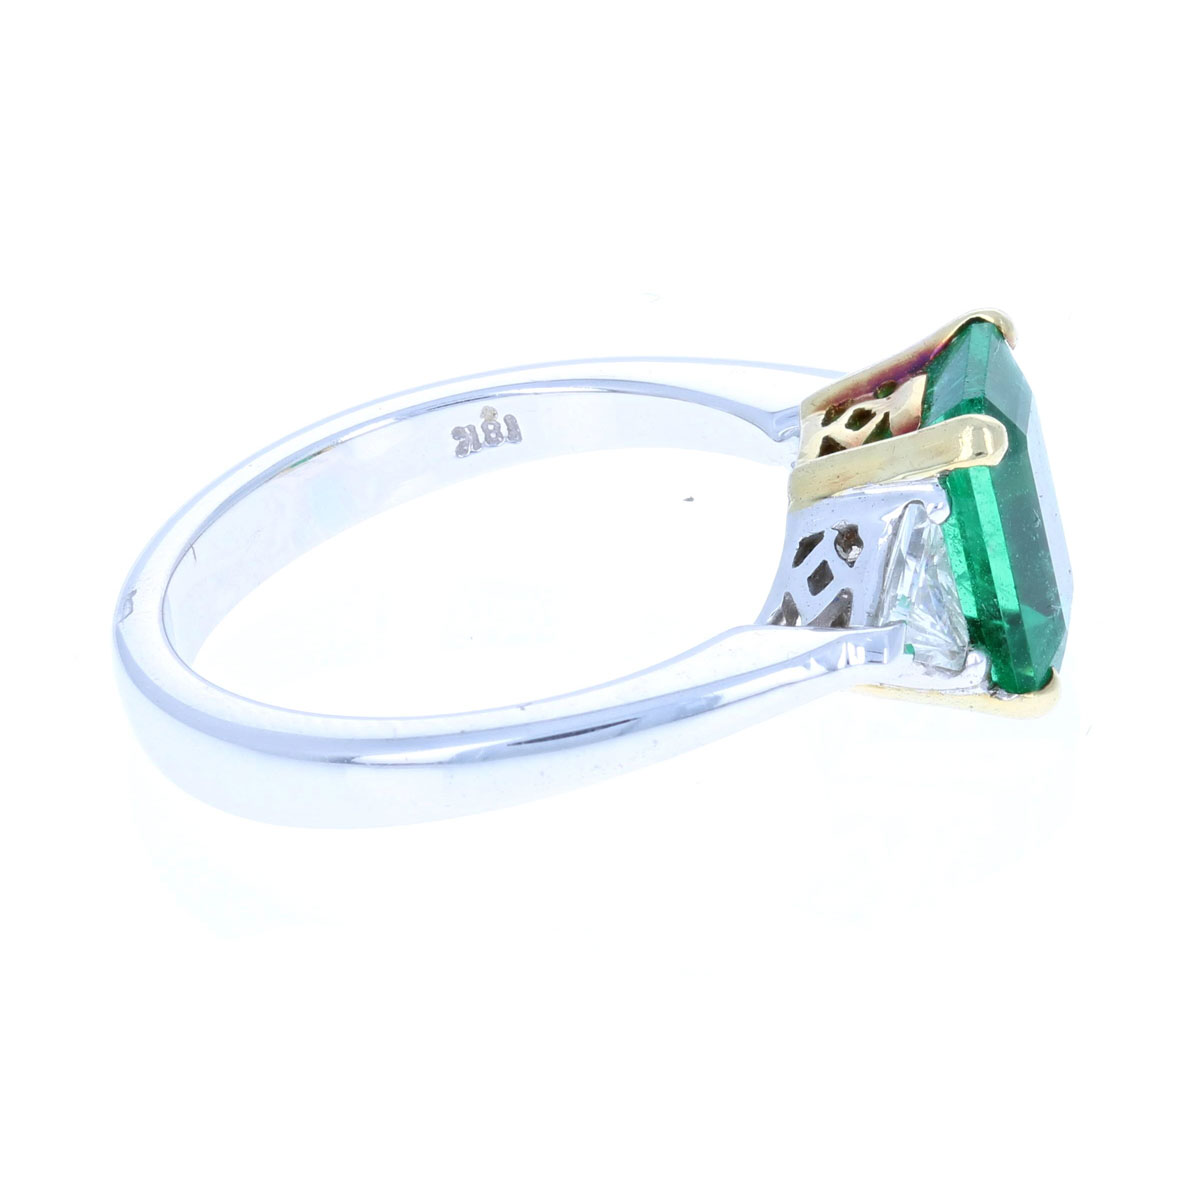 Emerald & Trillion Diamond Ring 18KT